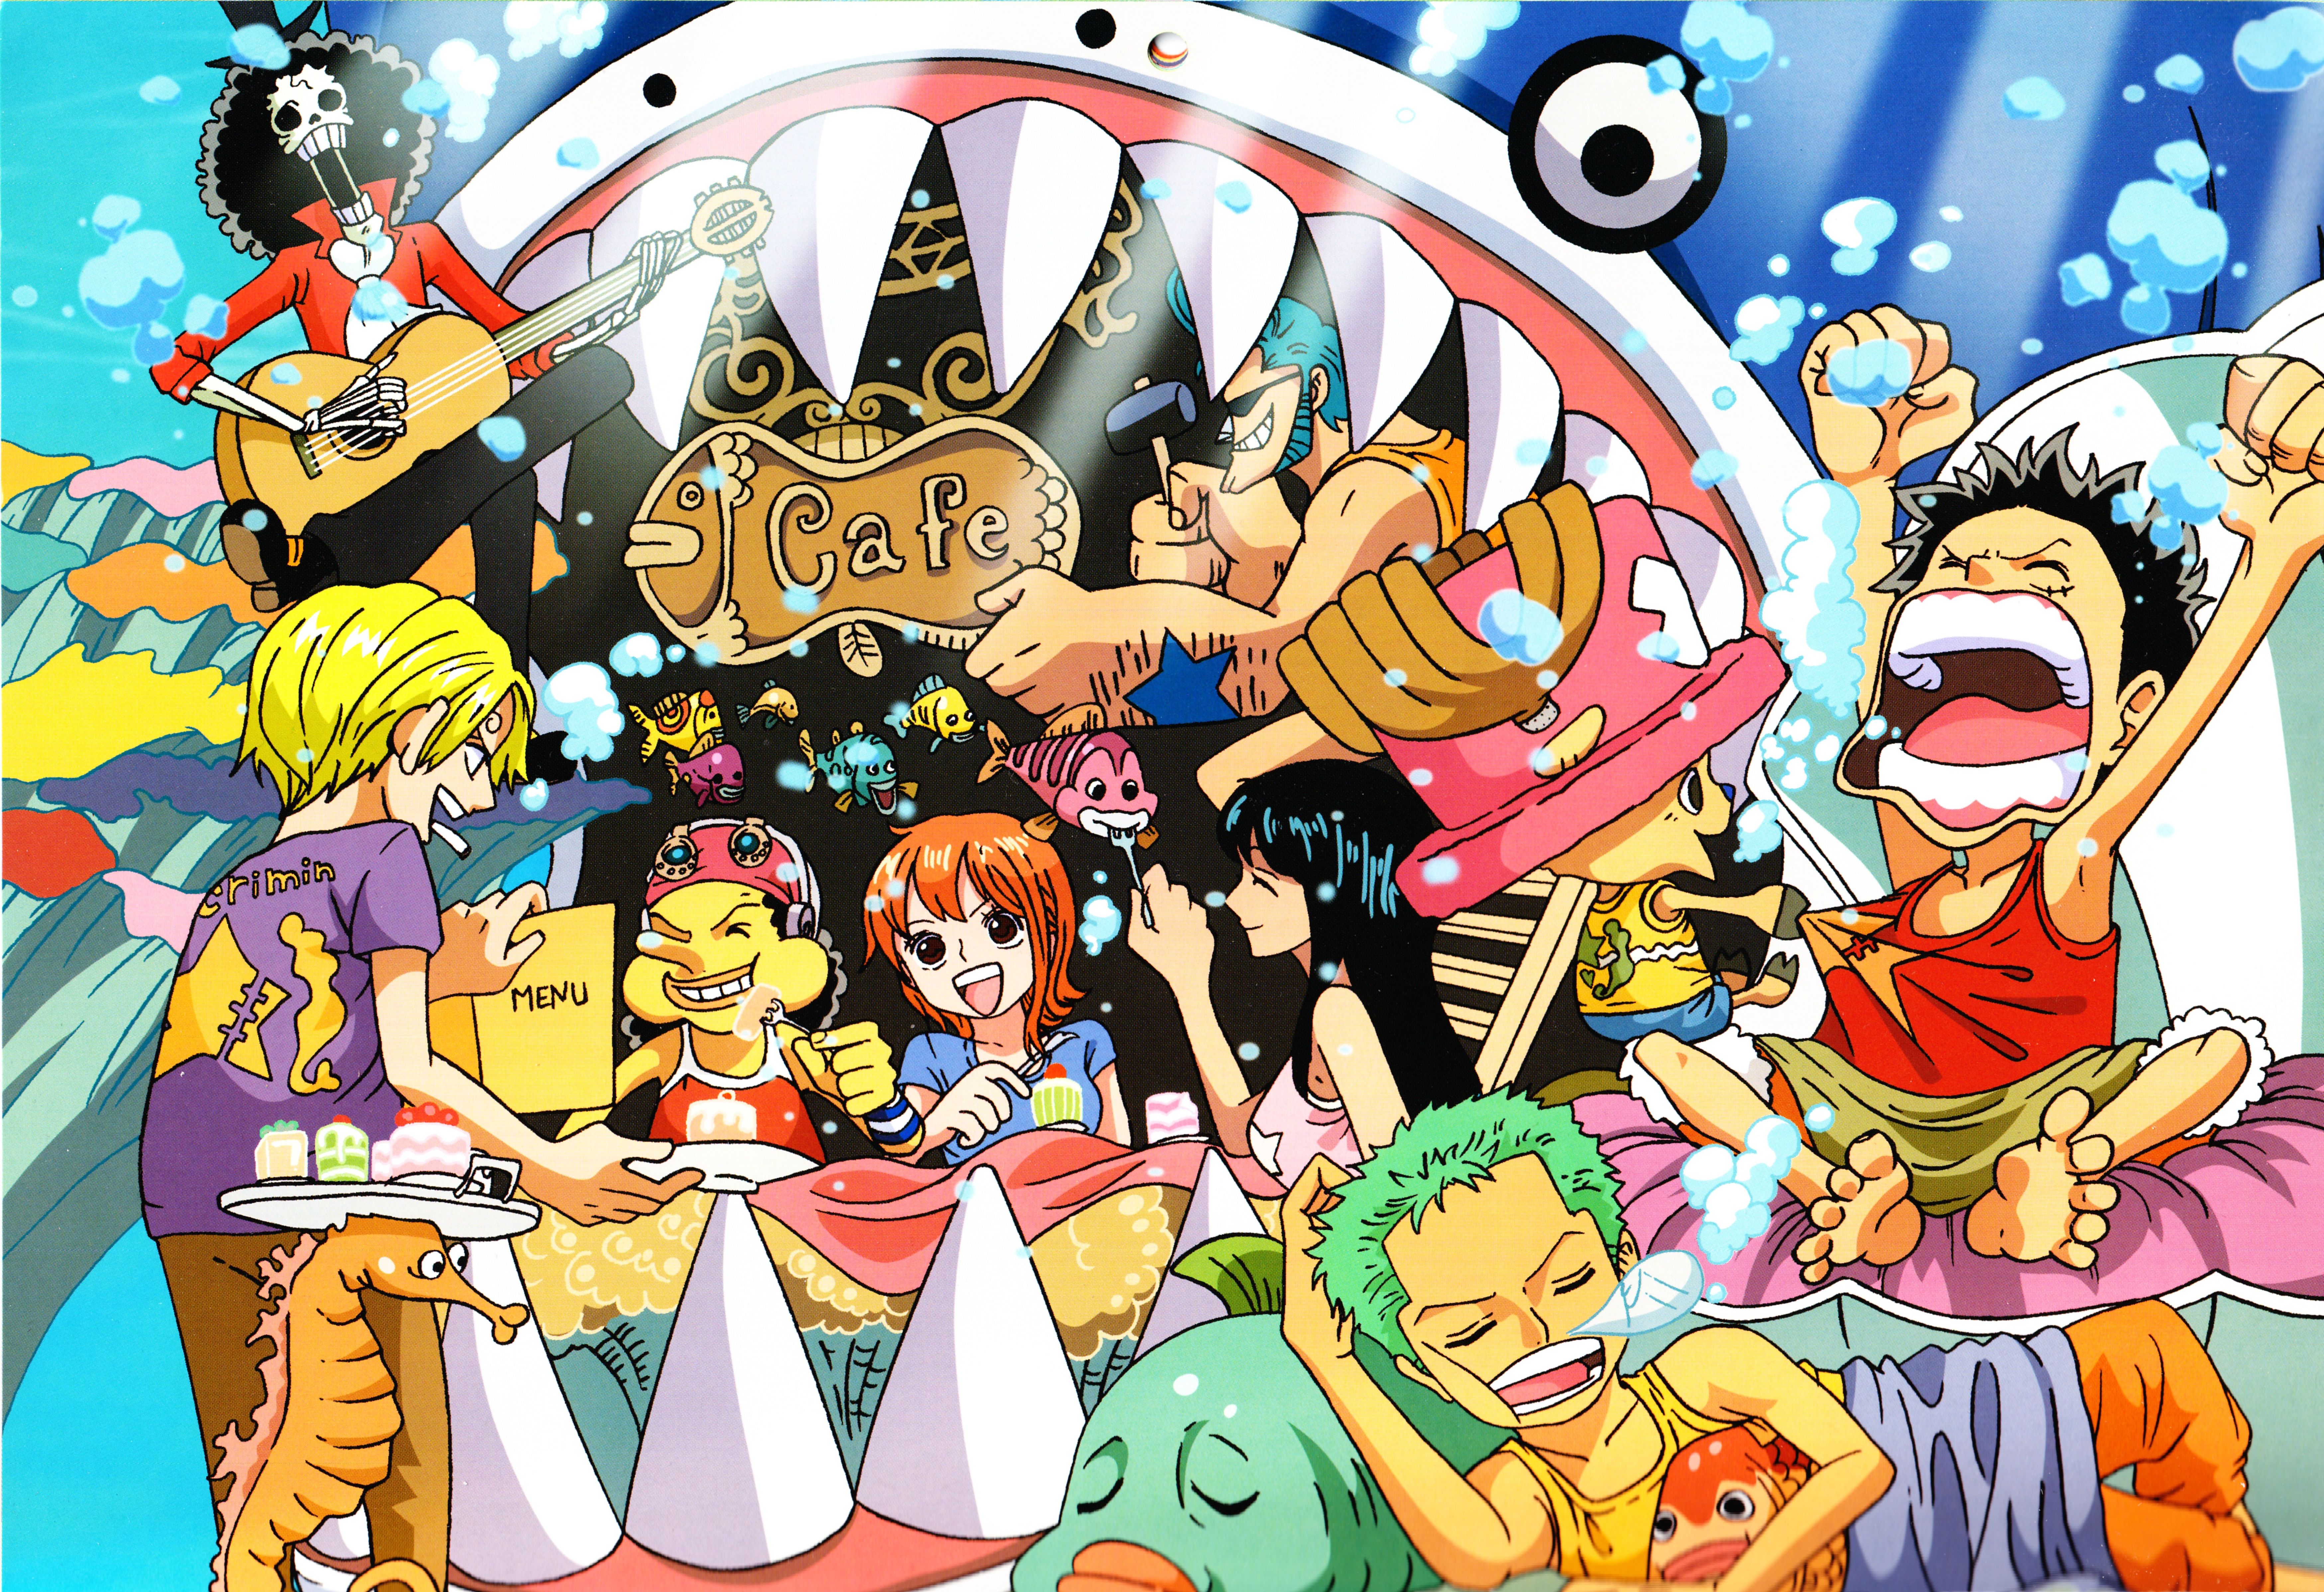 Descarga gratis la imagen Animado, One Piece, Tony Tony Chopper, Usopp (Una Pieza), Roronoa Zoro, Monkey D Luffy, Nami (Una Pieza), Sanji (Una Pieza), Arroyo (Una Pieza), Nico Robin, Franky (Una Pieza) en el escritorio de tu PC